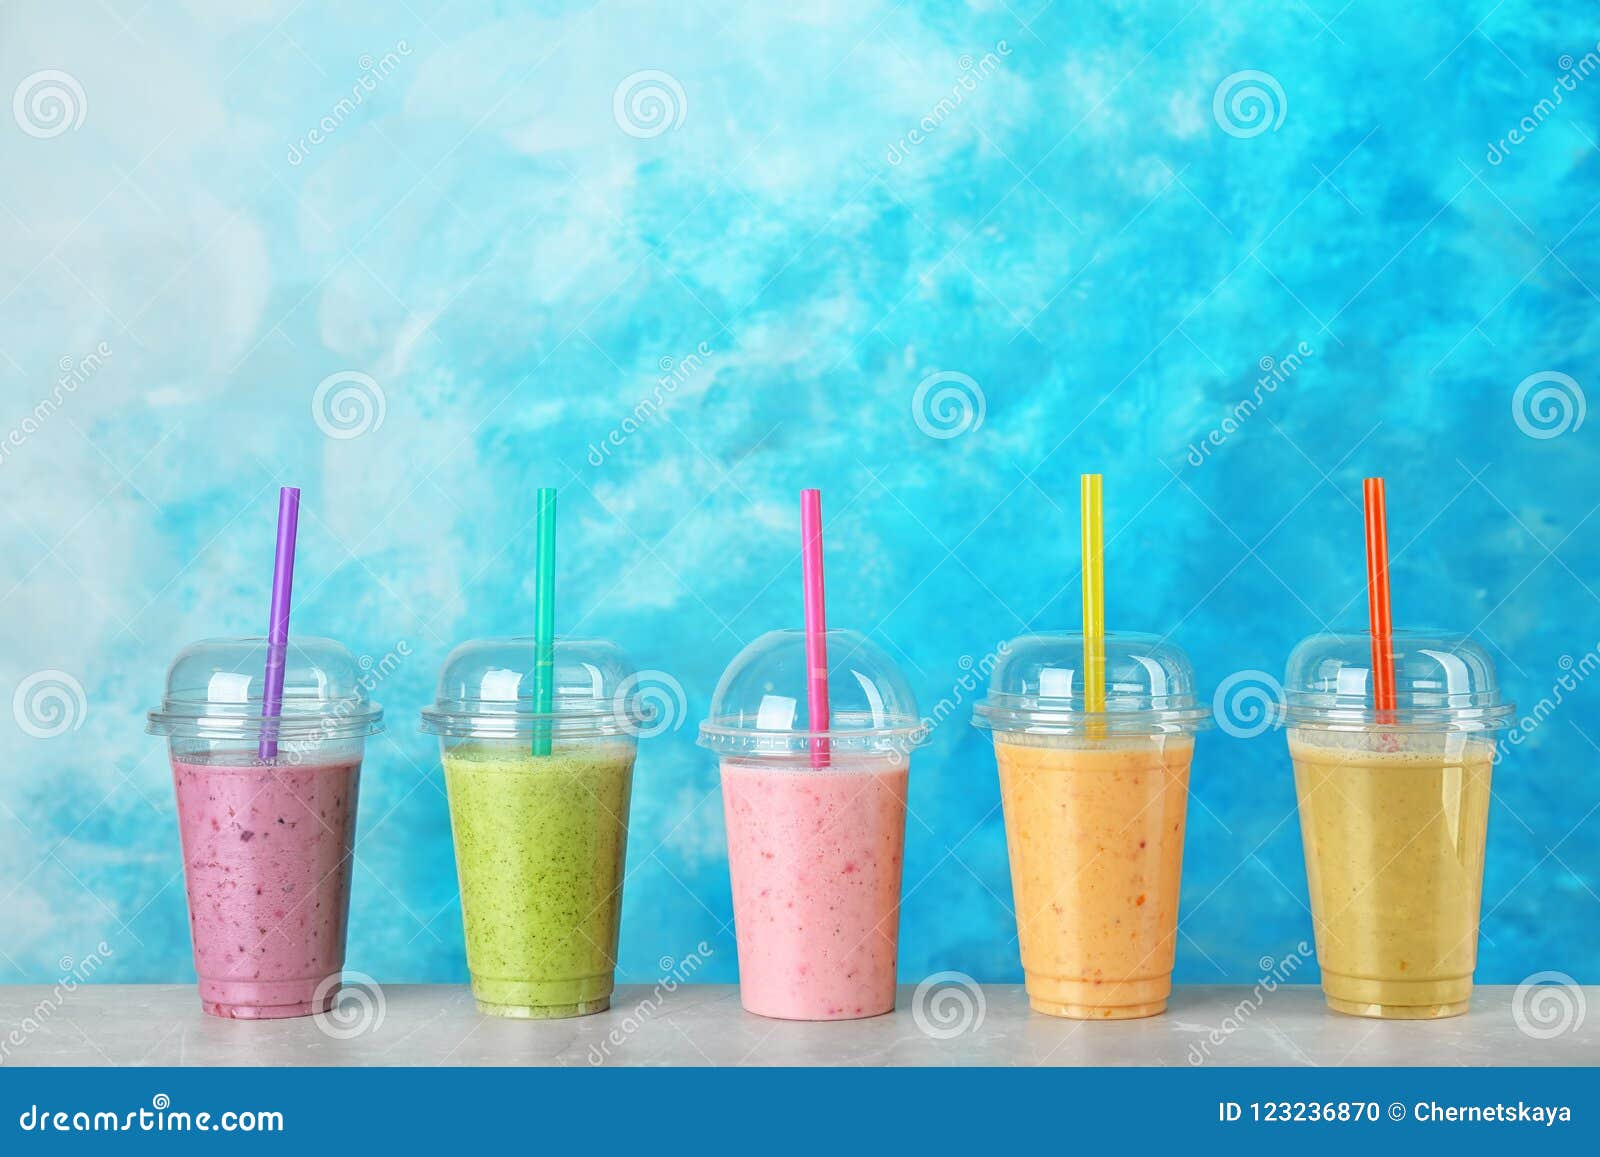 https://thumbs.dreamstime.com/z/plastic-cups-smoothies-table-plastic-cups-smoothies-table-against-color-background-123236870.jpg